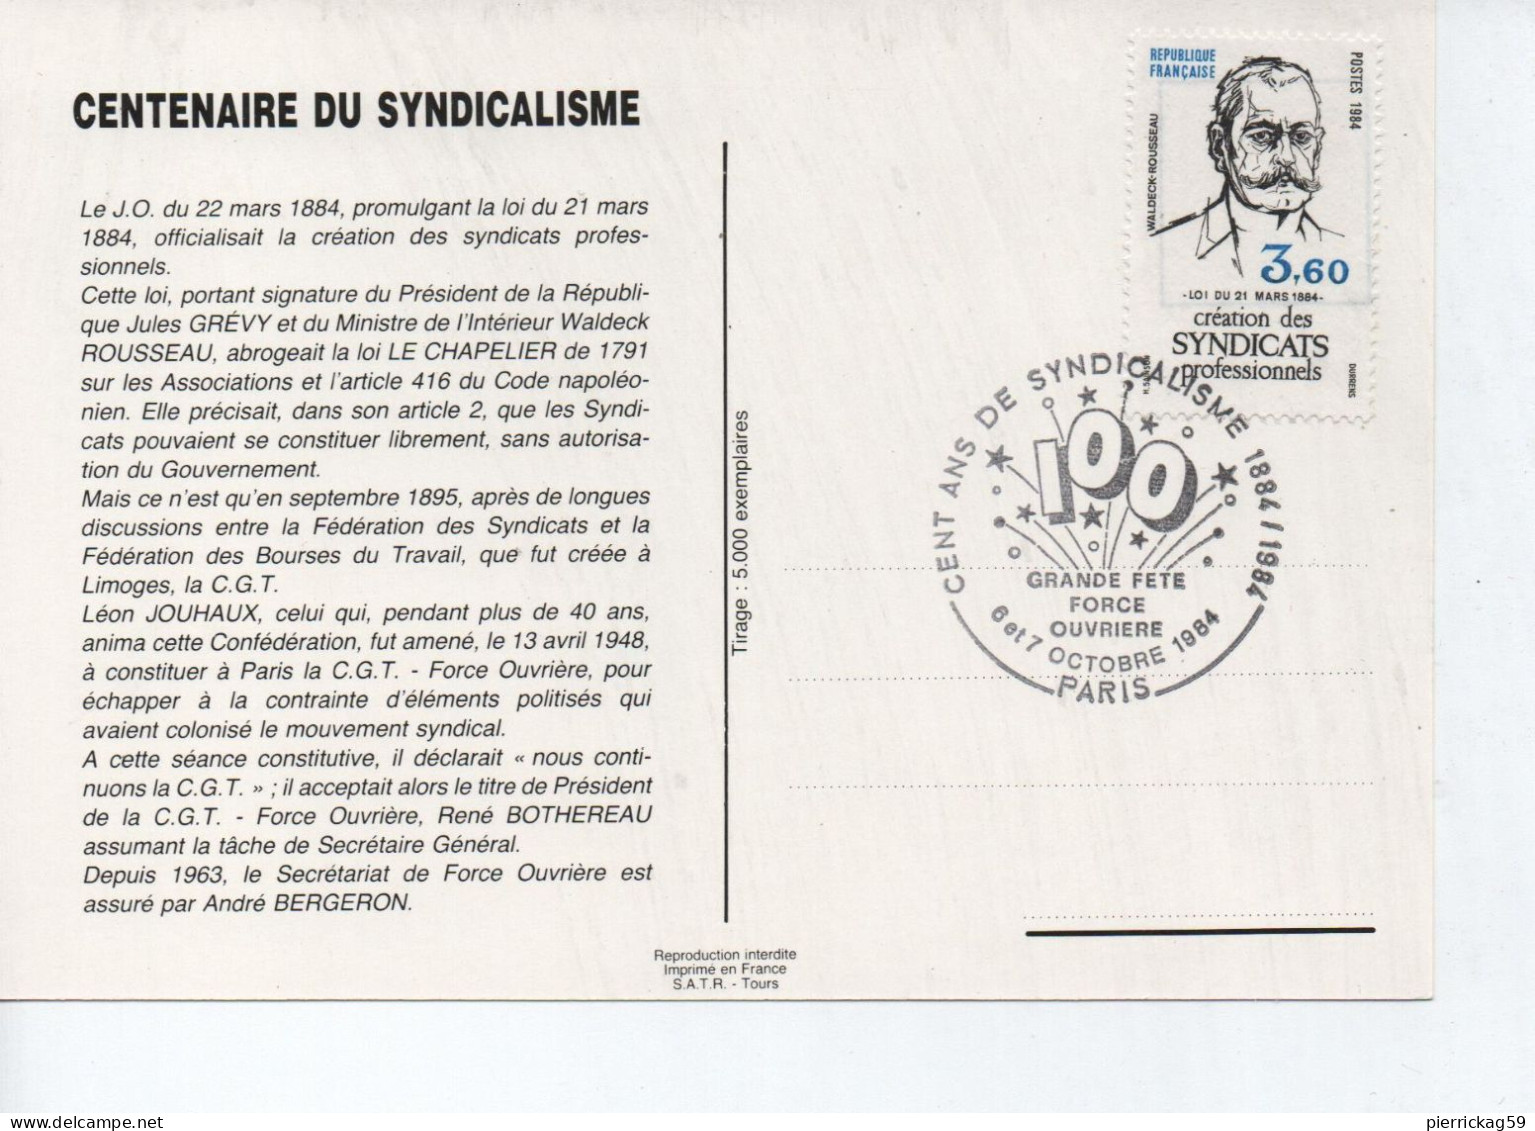 CPM  LE SYNDICALISME A 100 ANS 1884  / 1984 - Gewerkschaften